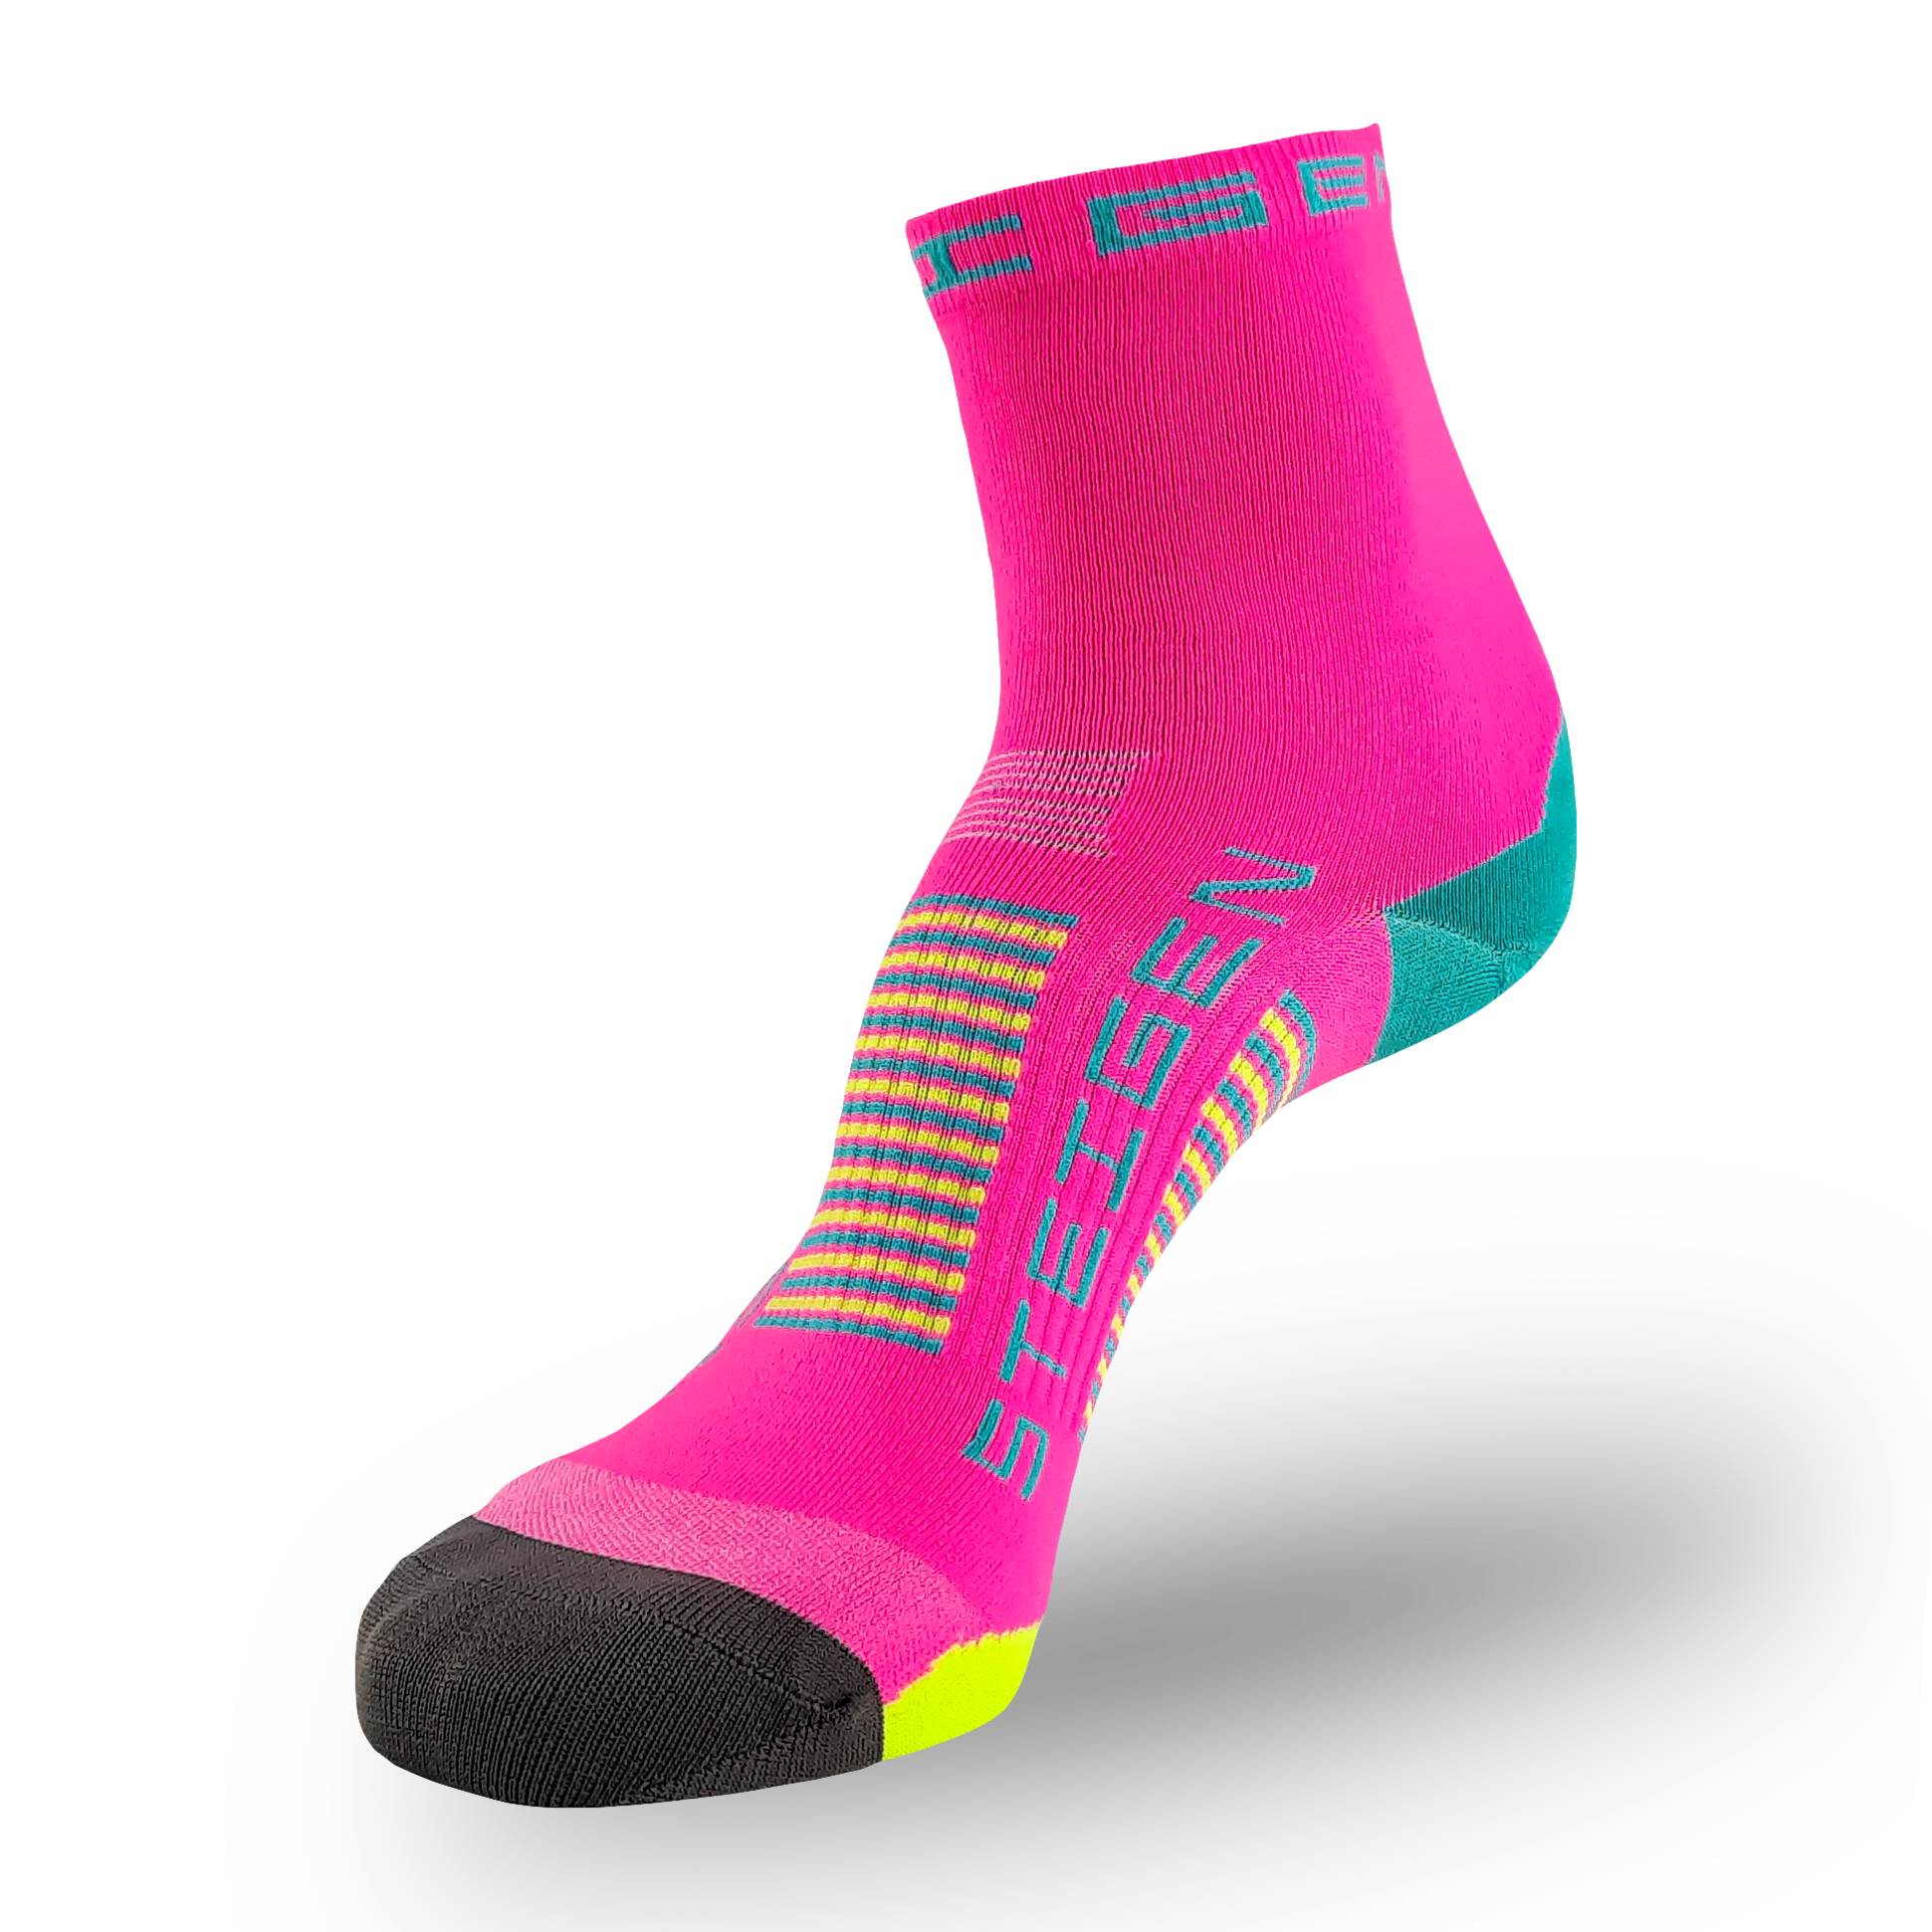 Pink Candy Running Socks ½ Length